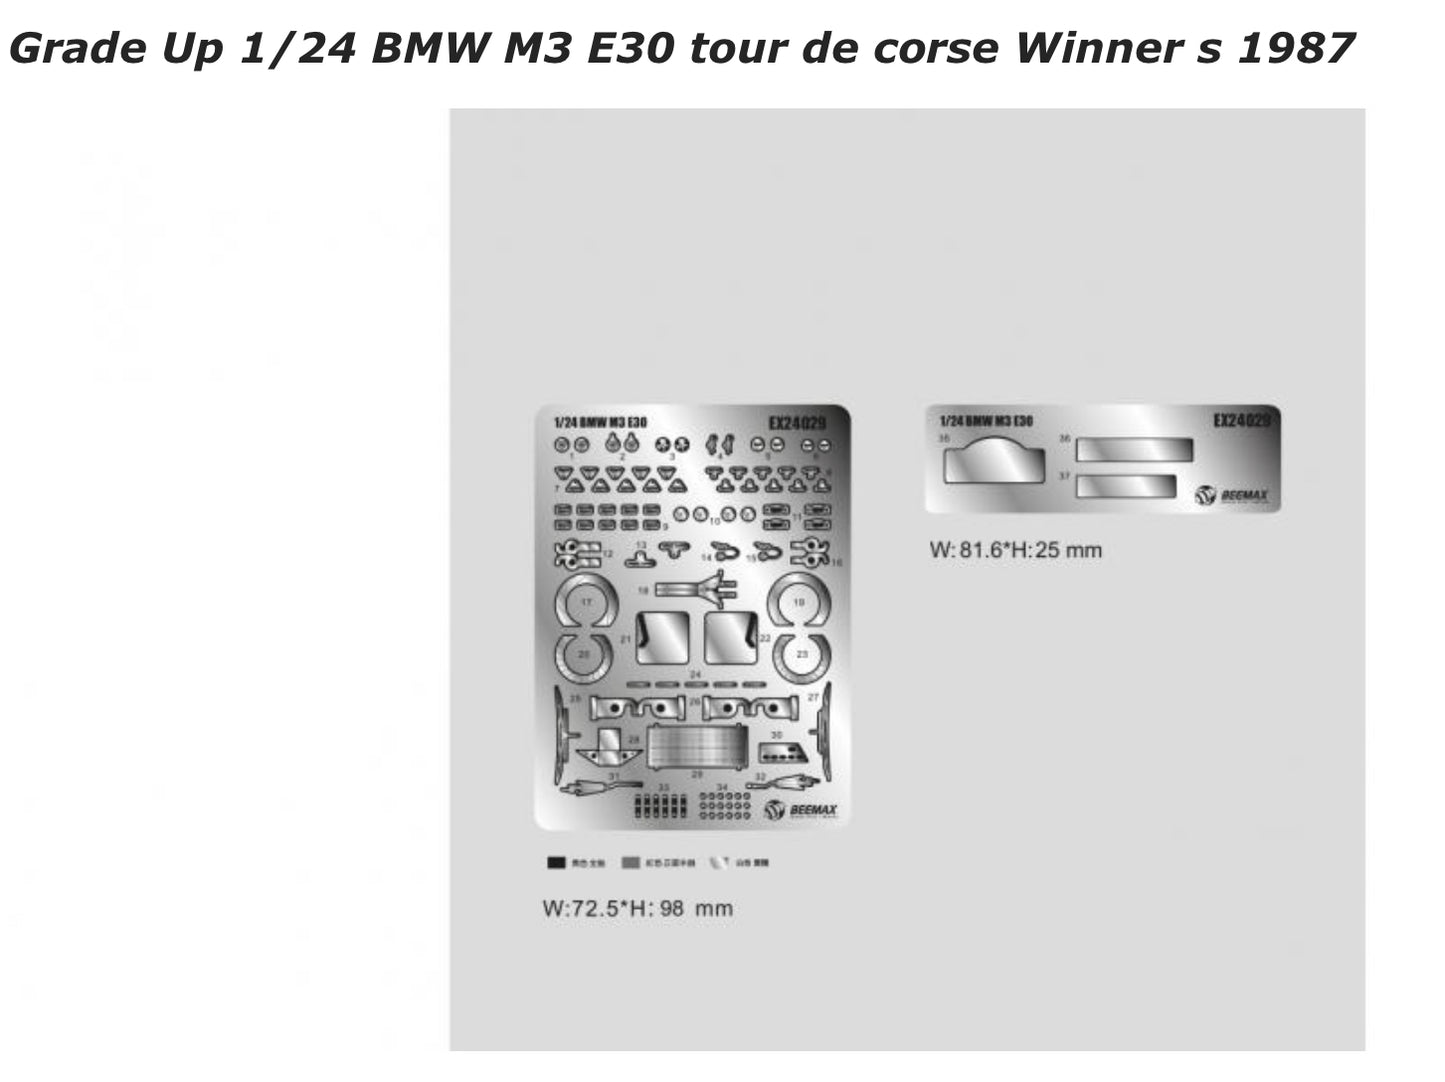 DETAIL SET UP BMW M3 E30 - 1987 RALLY TOUR DE CORSE